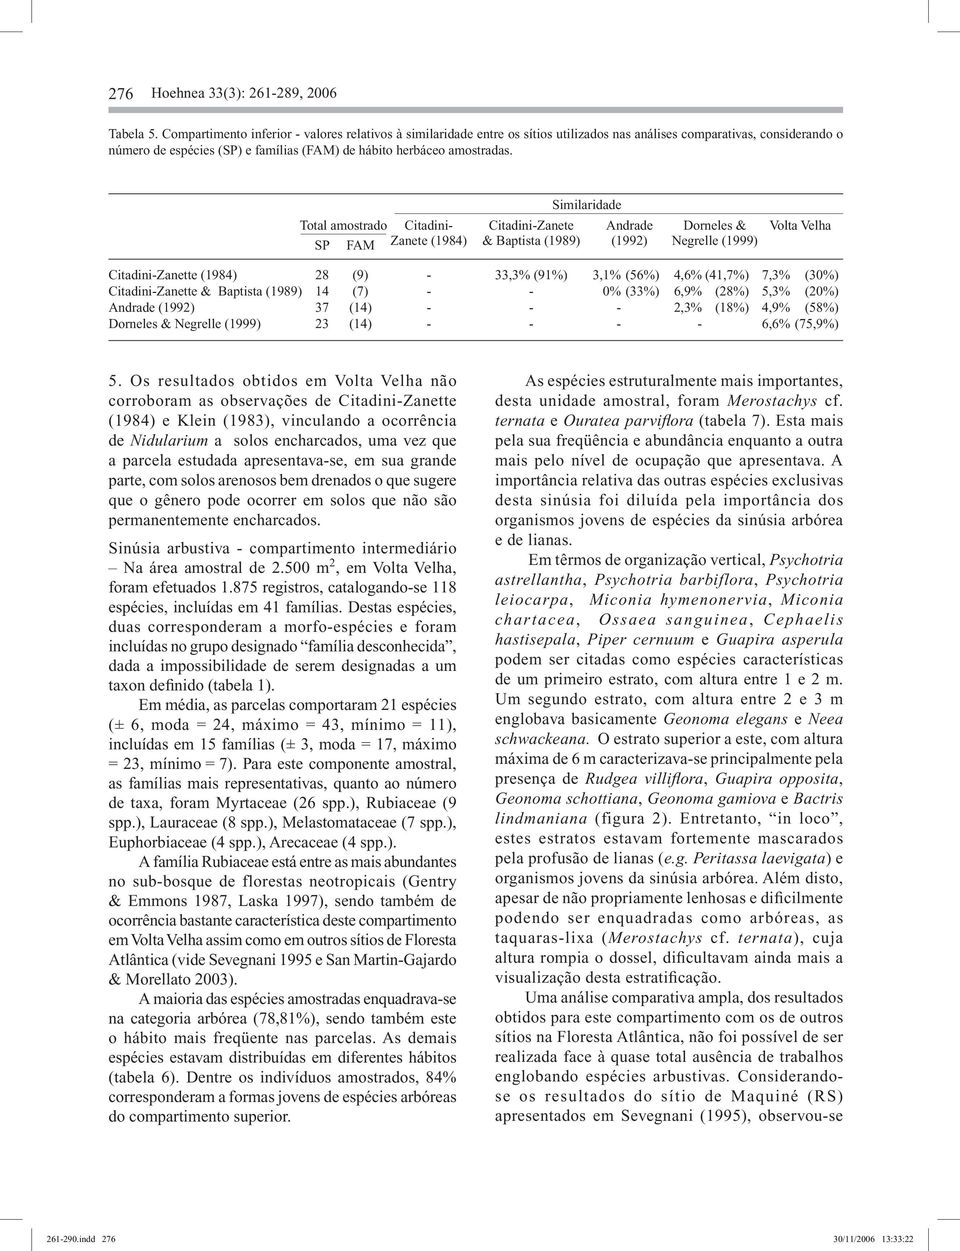 Similaridade Total amostrado Citadini- Citadini-Zanete Andrade Dorneles & Volta Velha SP FAM Zanete (1984) & Baptista (1989) (1992) Negrelle (1999) Citadini-Zanette (1984) 28 (9) - 33,3% (91%) 3,1%